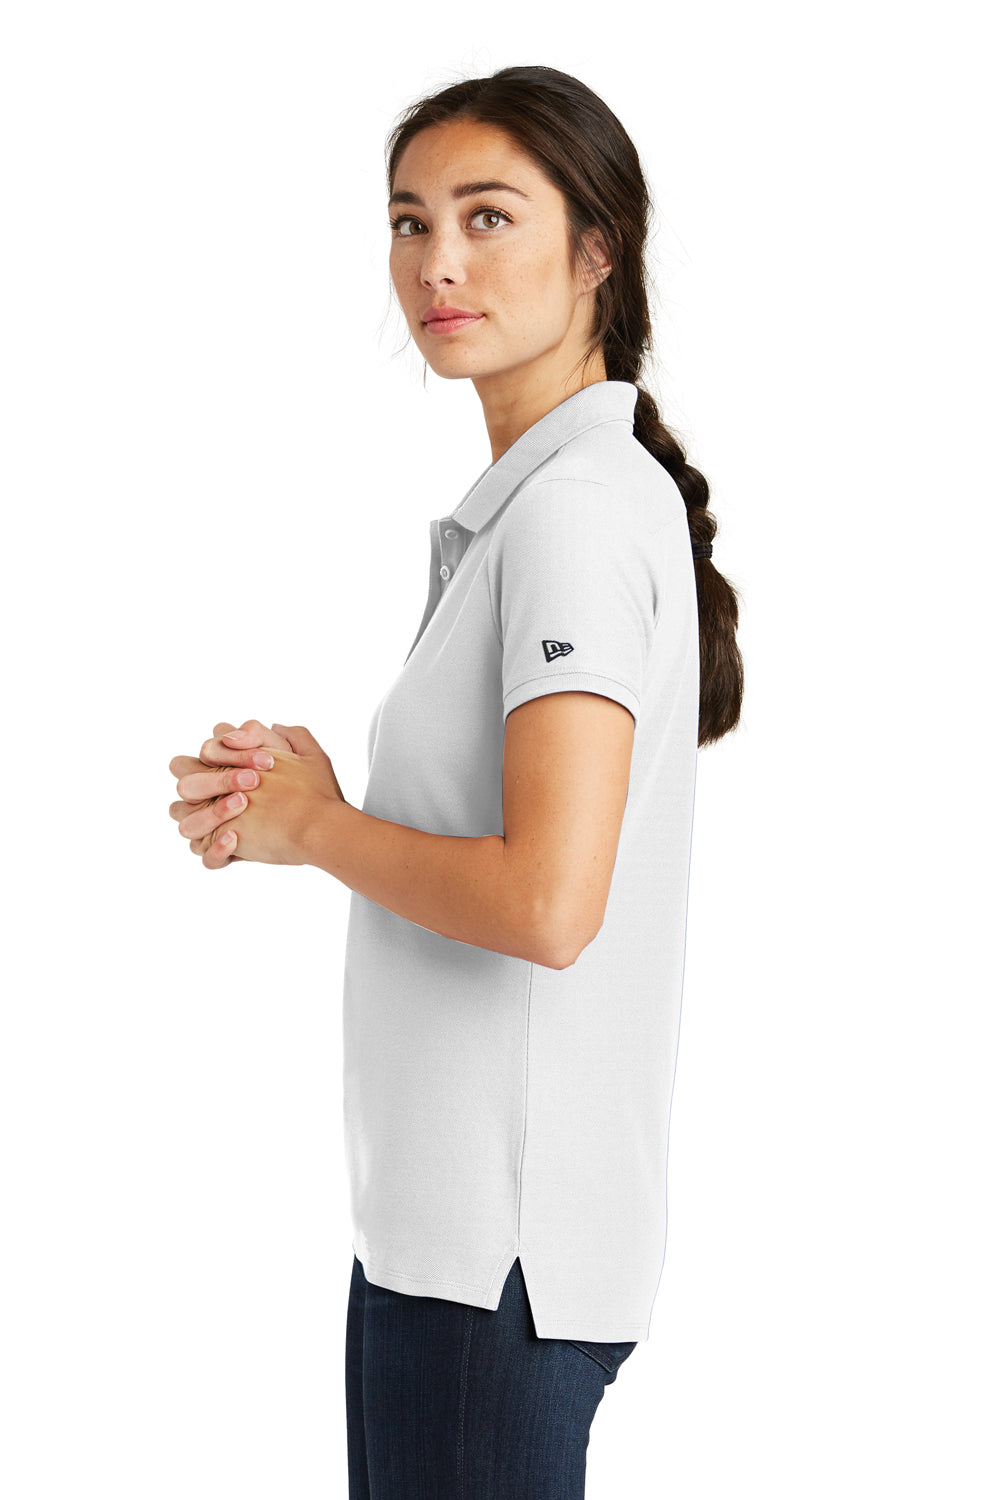 New Era LNEA300 Womens Venue Home Plate Moisture Wicking Short Sleeve Polo Shirt White Side